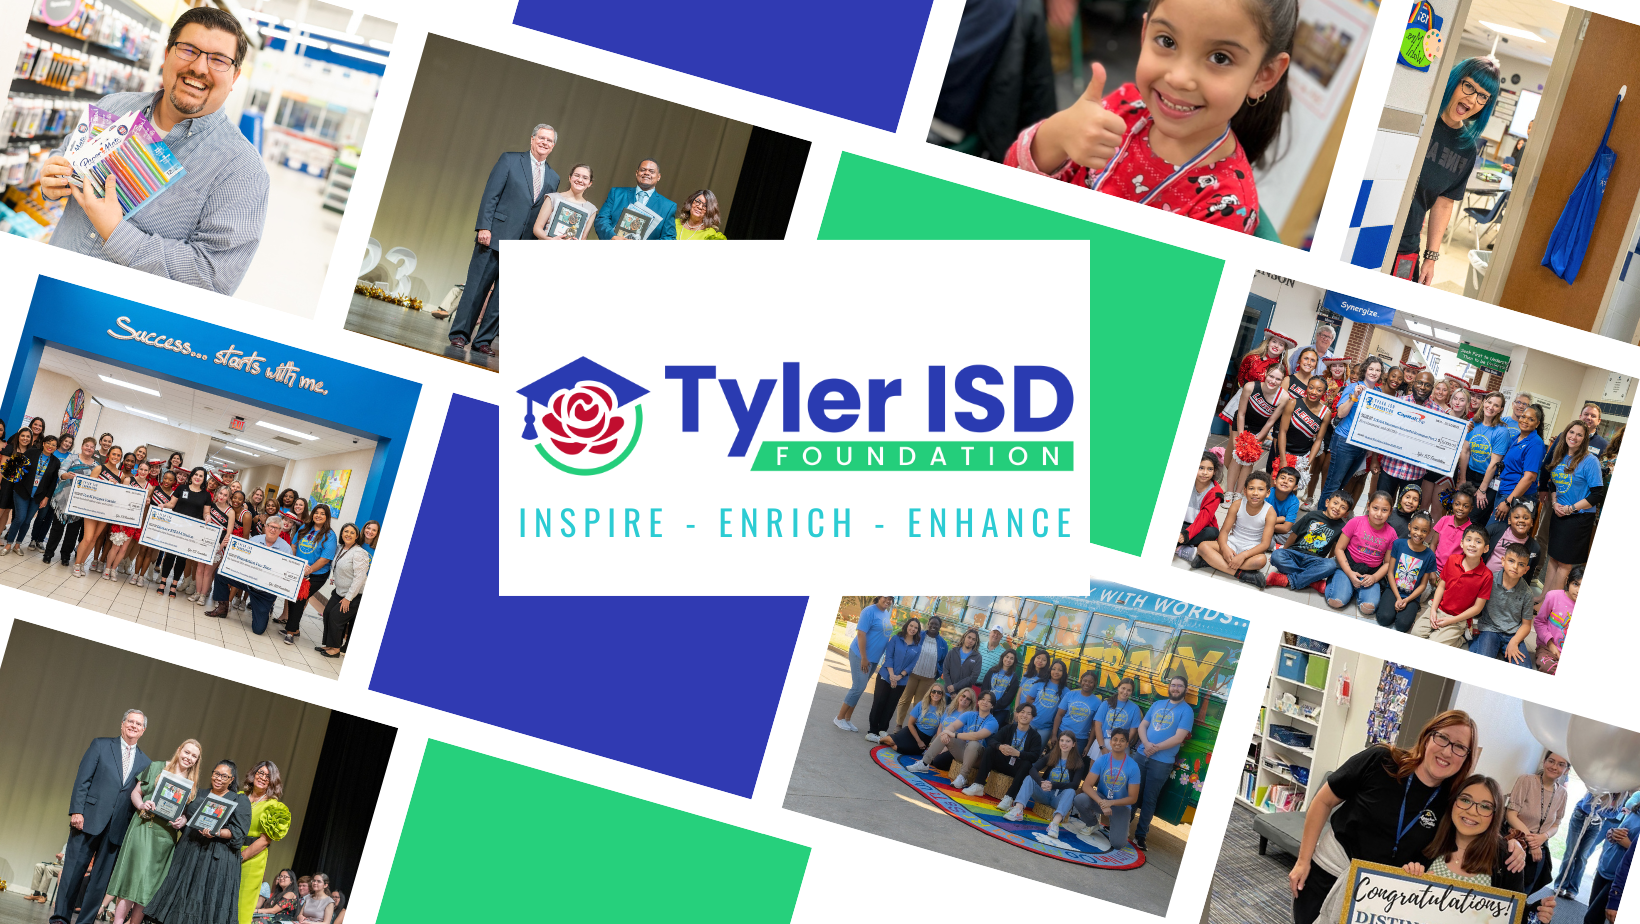 Tyler ISD Foundation